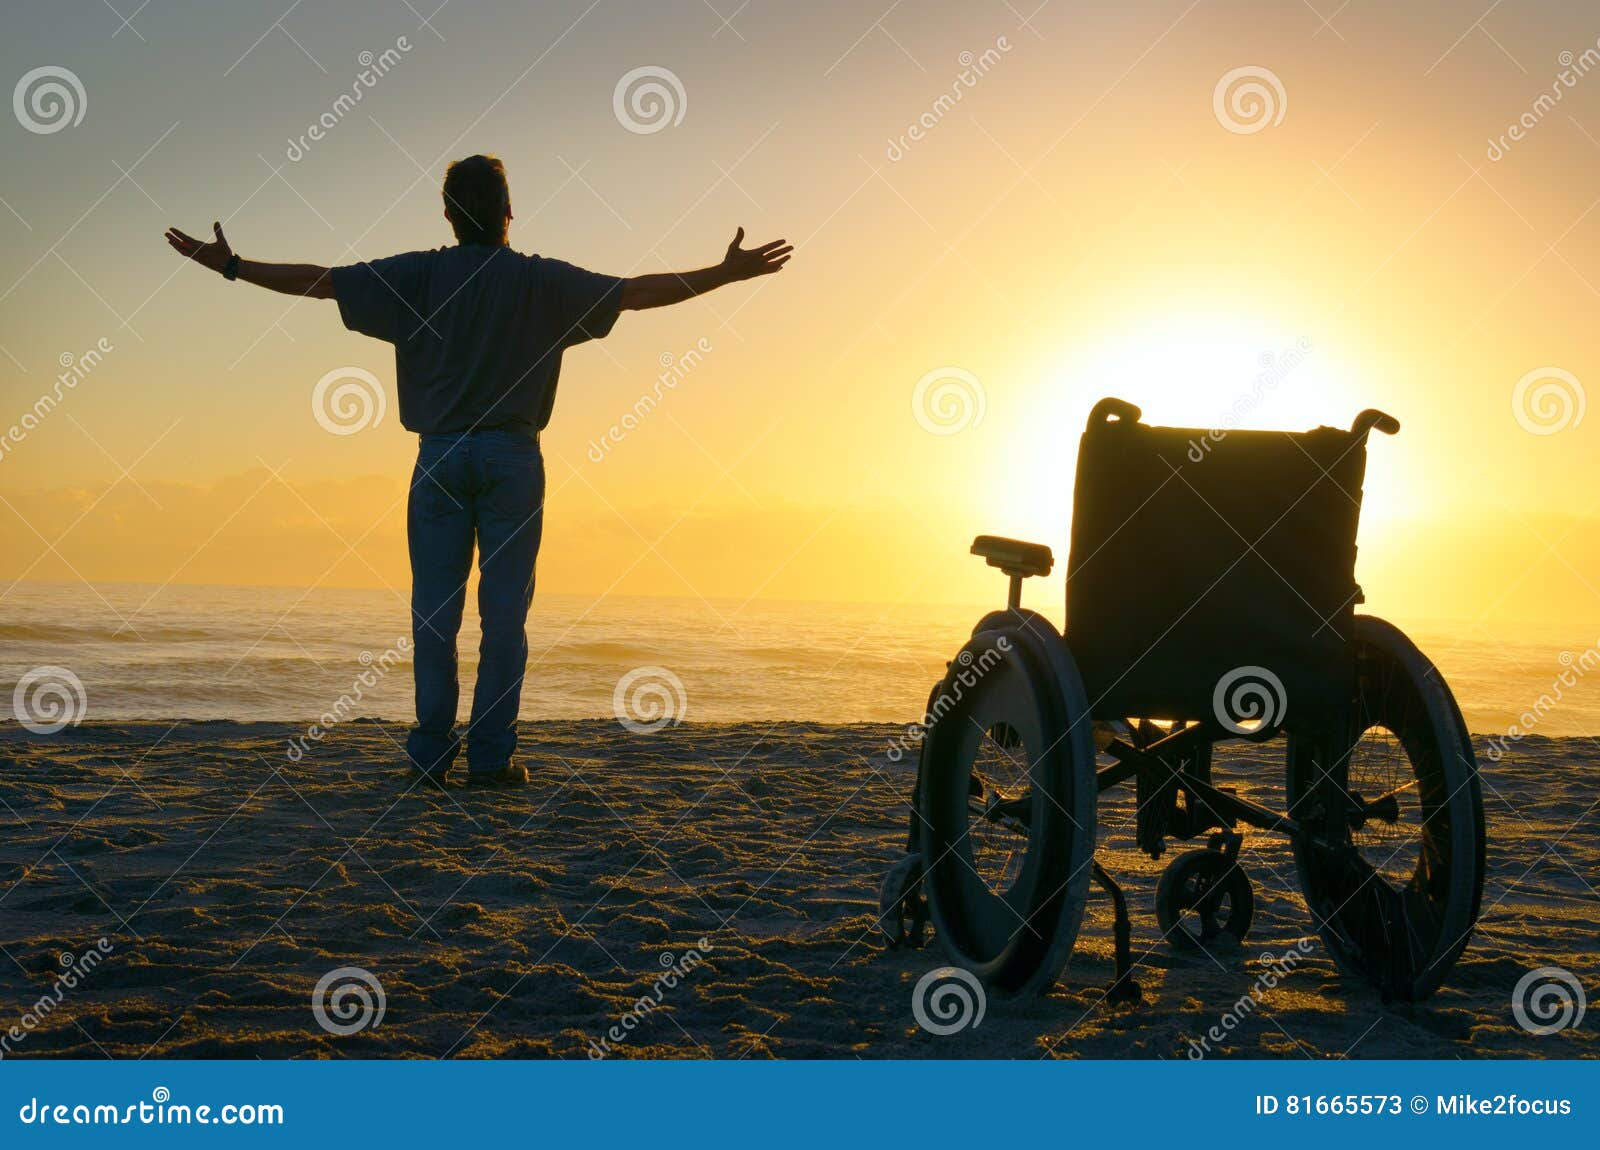 miracle spiritual healing crippled man walking at beach at sunrise